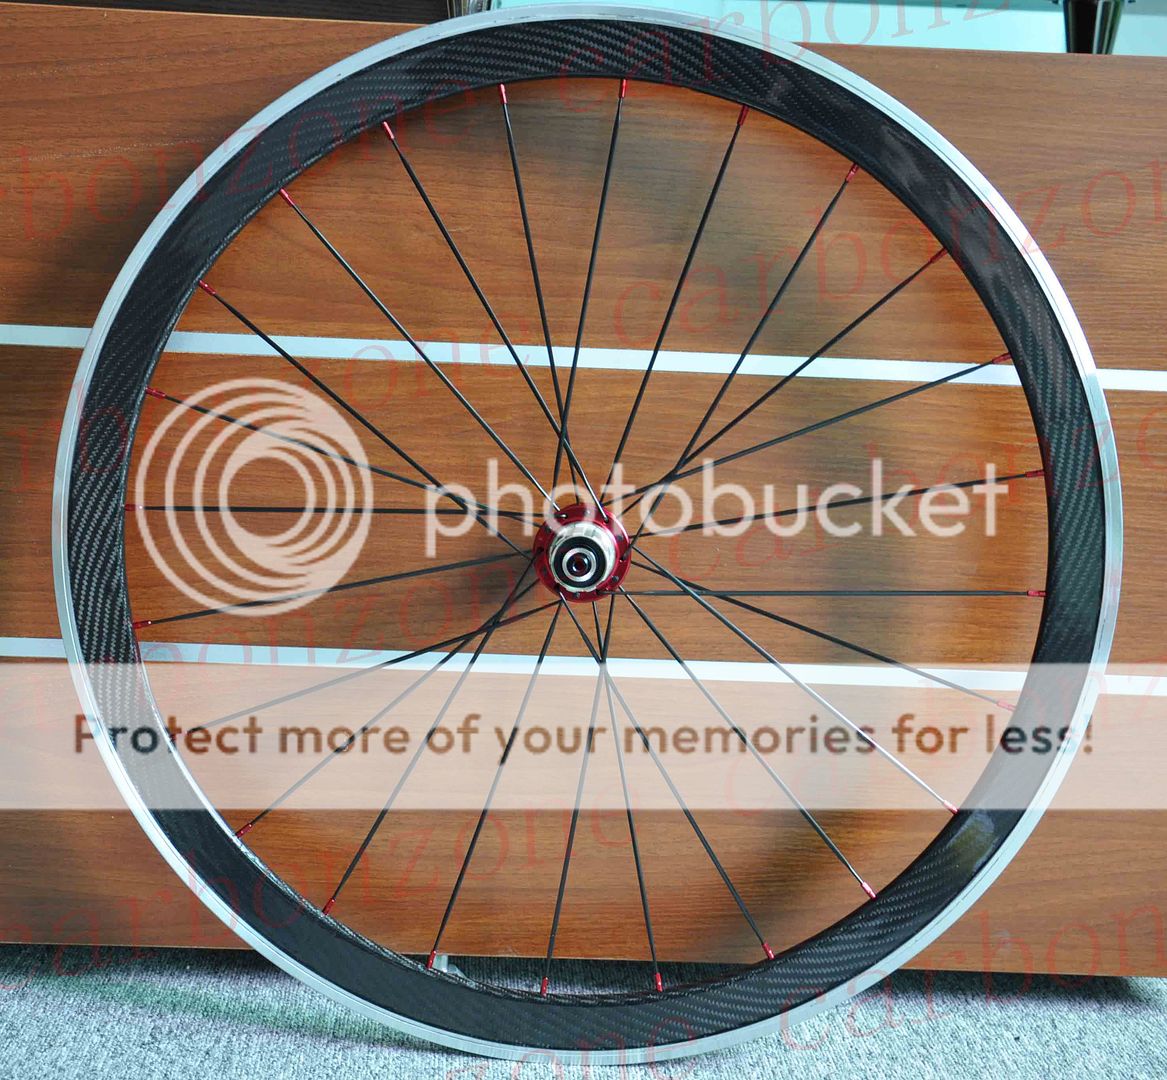 42mm Alloy Carbon Road Bike Clincher Wheels Wheelset Red Hub